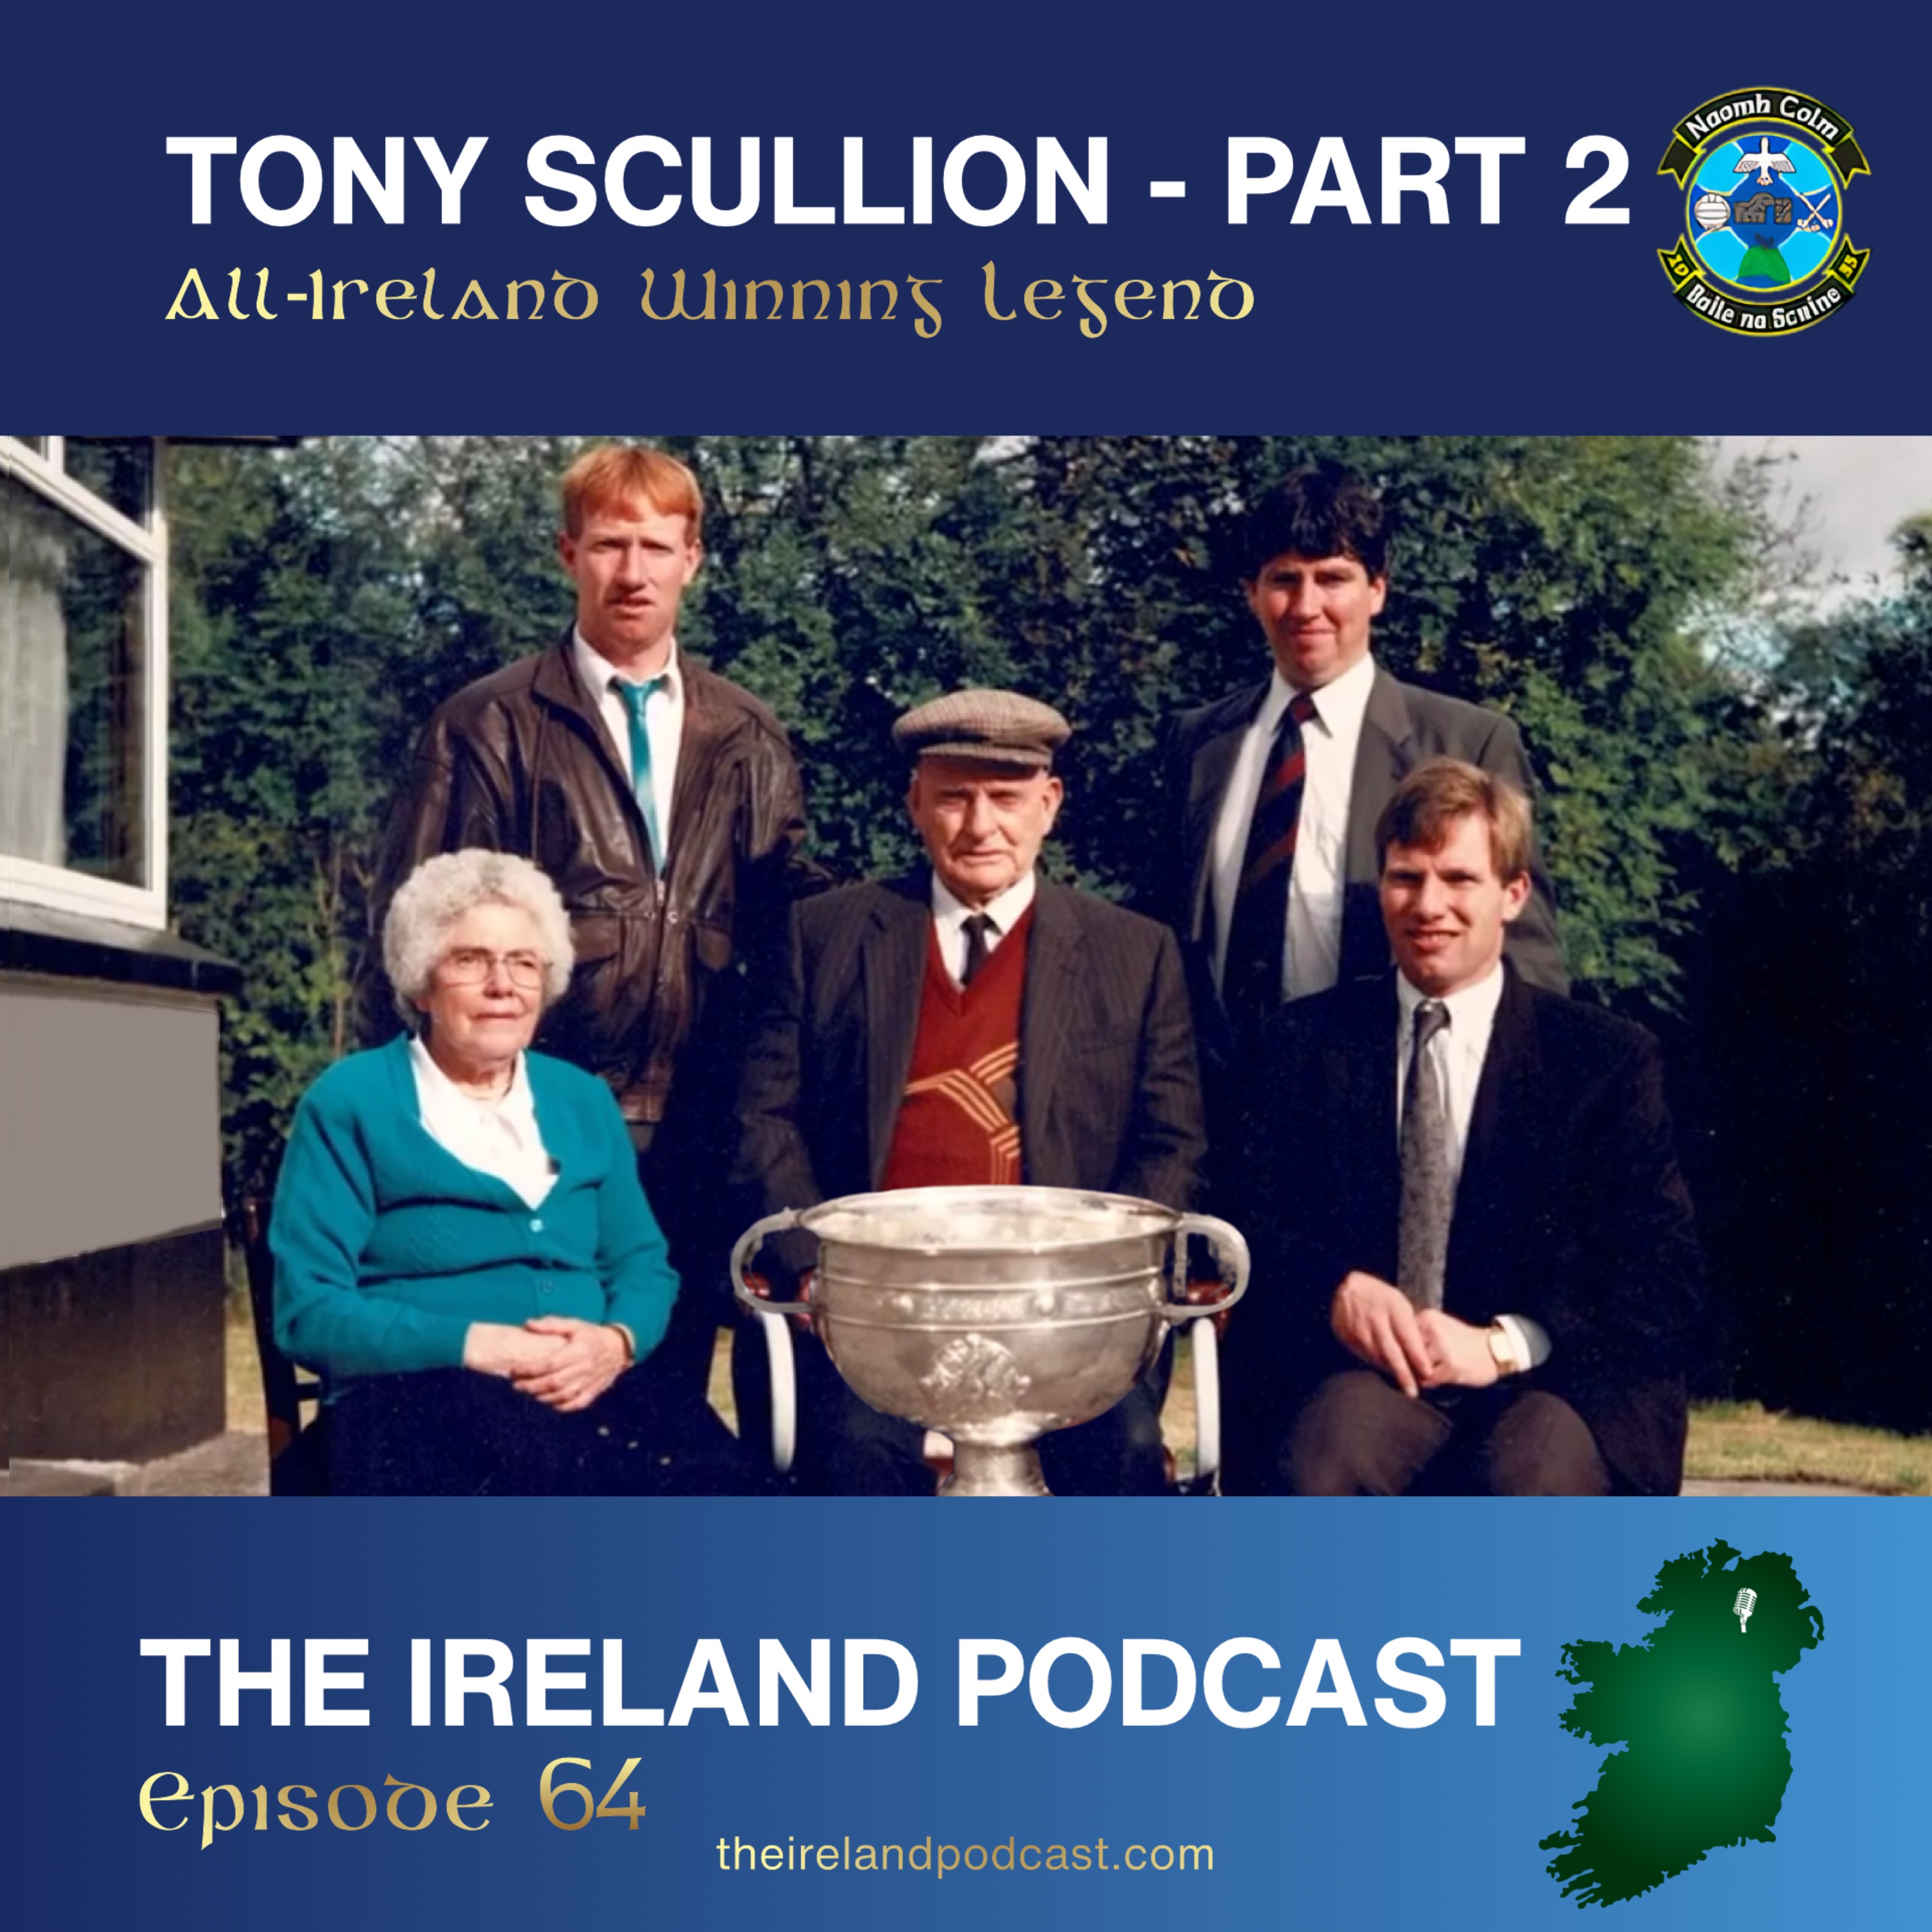 64. Tony Scullion: All-Ireland Winning Legend - Part 2